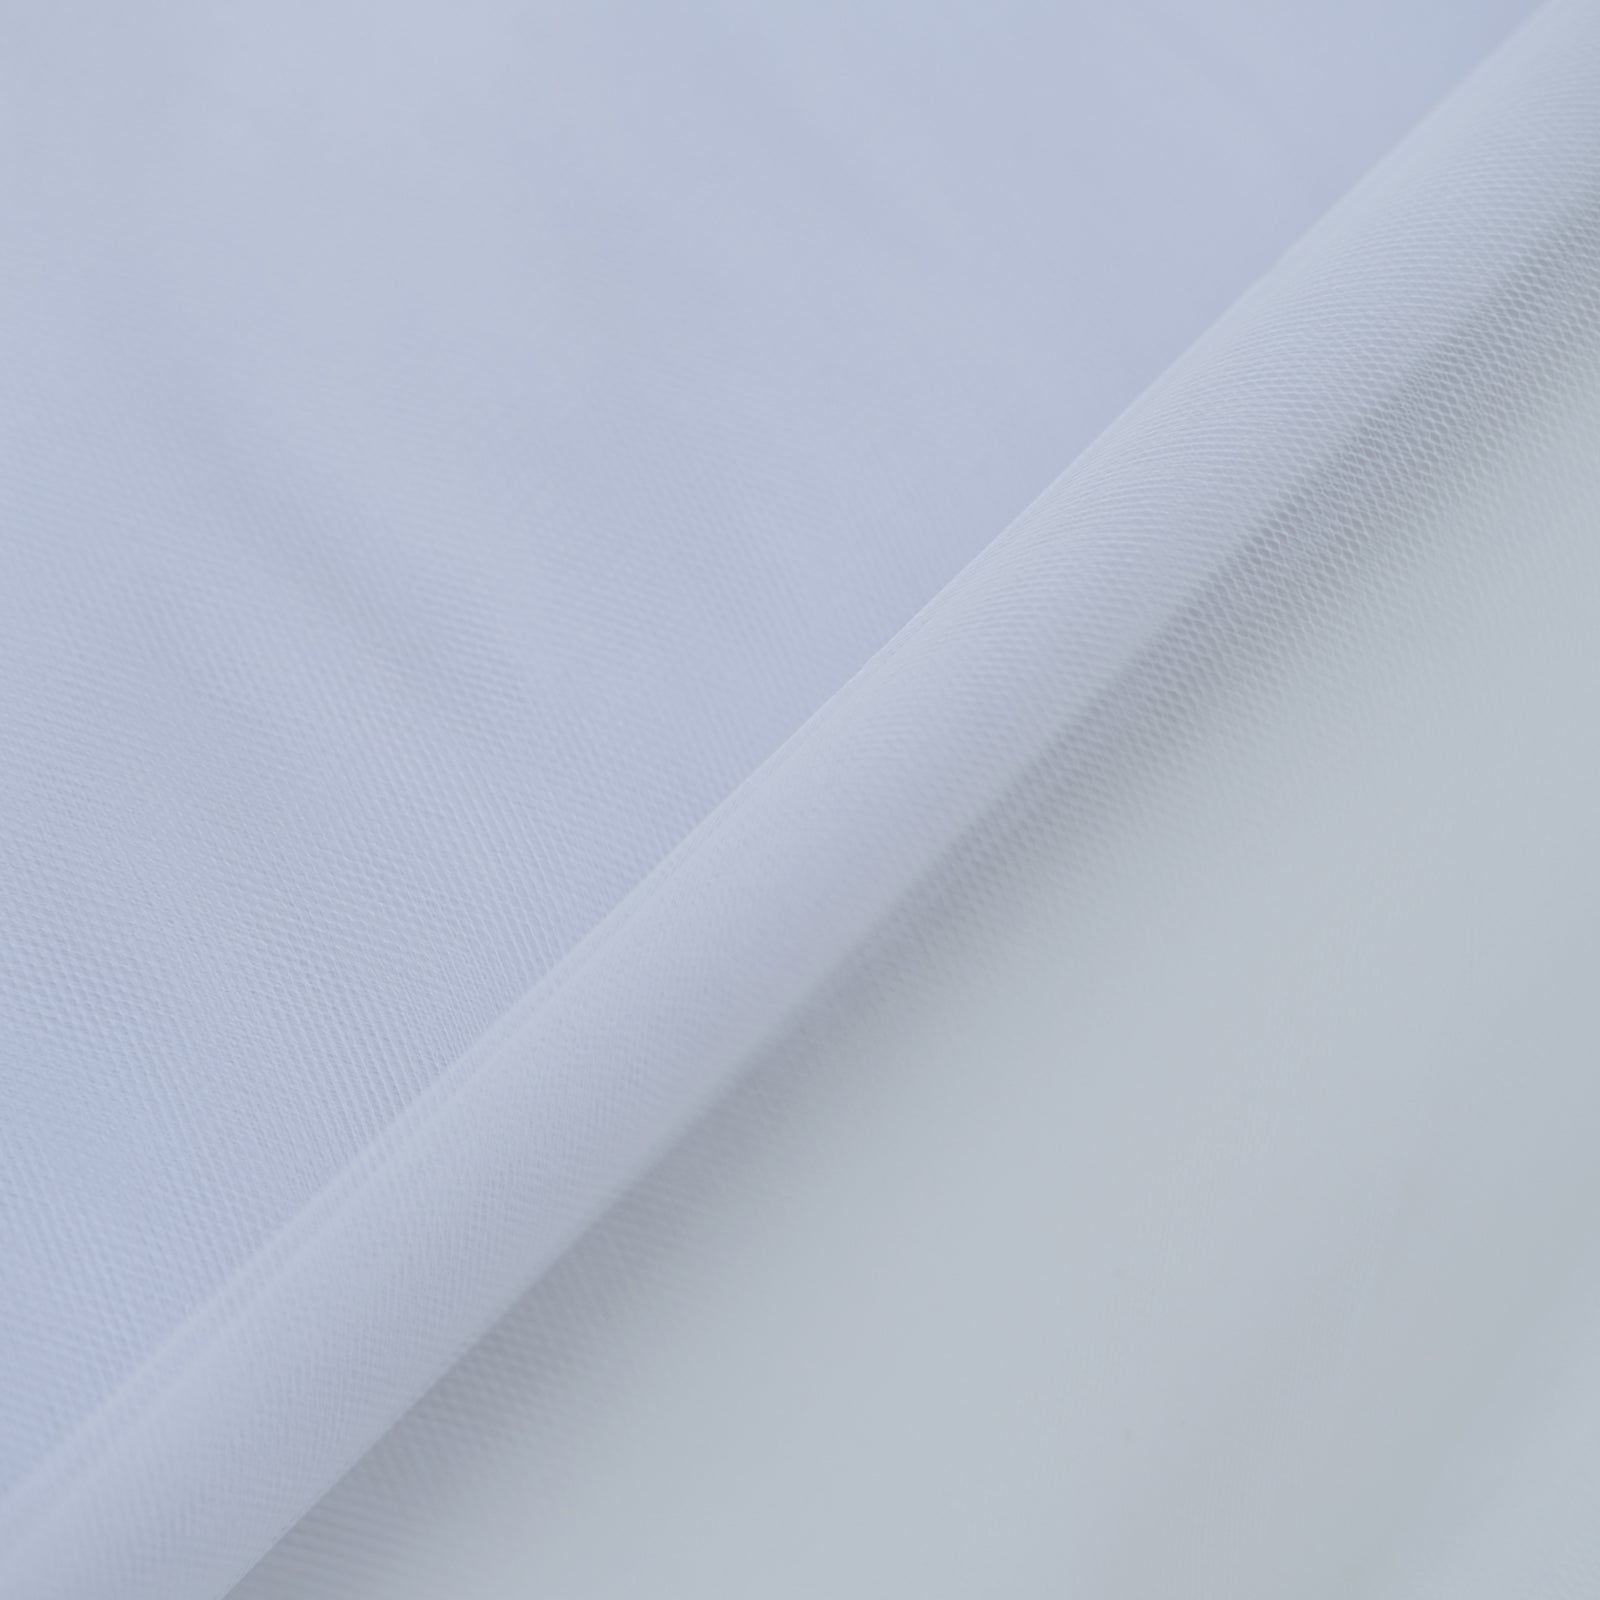 54x40 Yards White Tulle Fabric Bolt | eFavormart.com